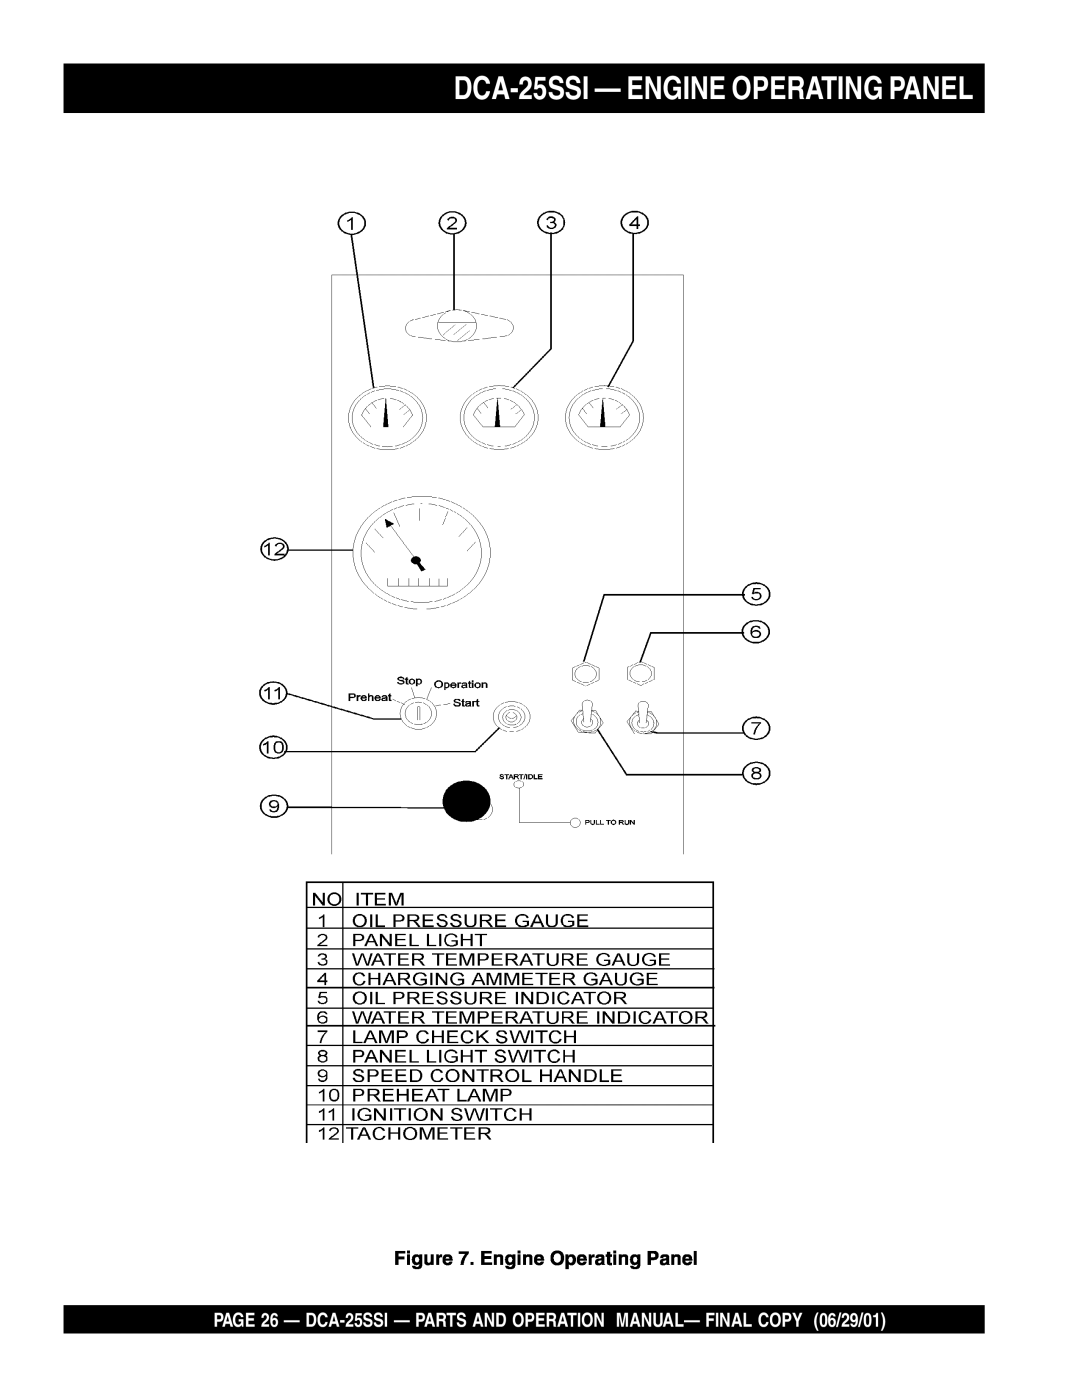 Multiquip operation manual DCA-25SSI— ENGINE OPERATING PANEL, Engine Operating Panel 